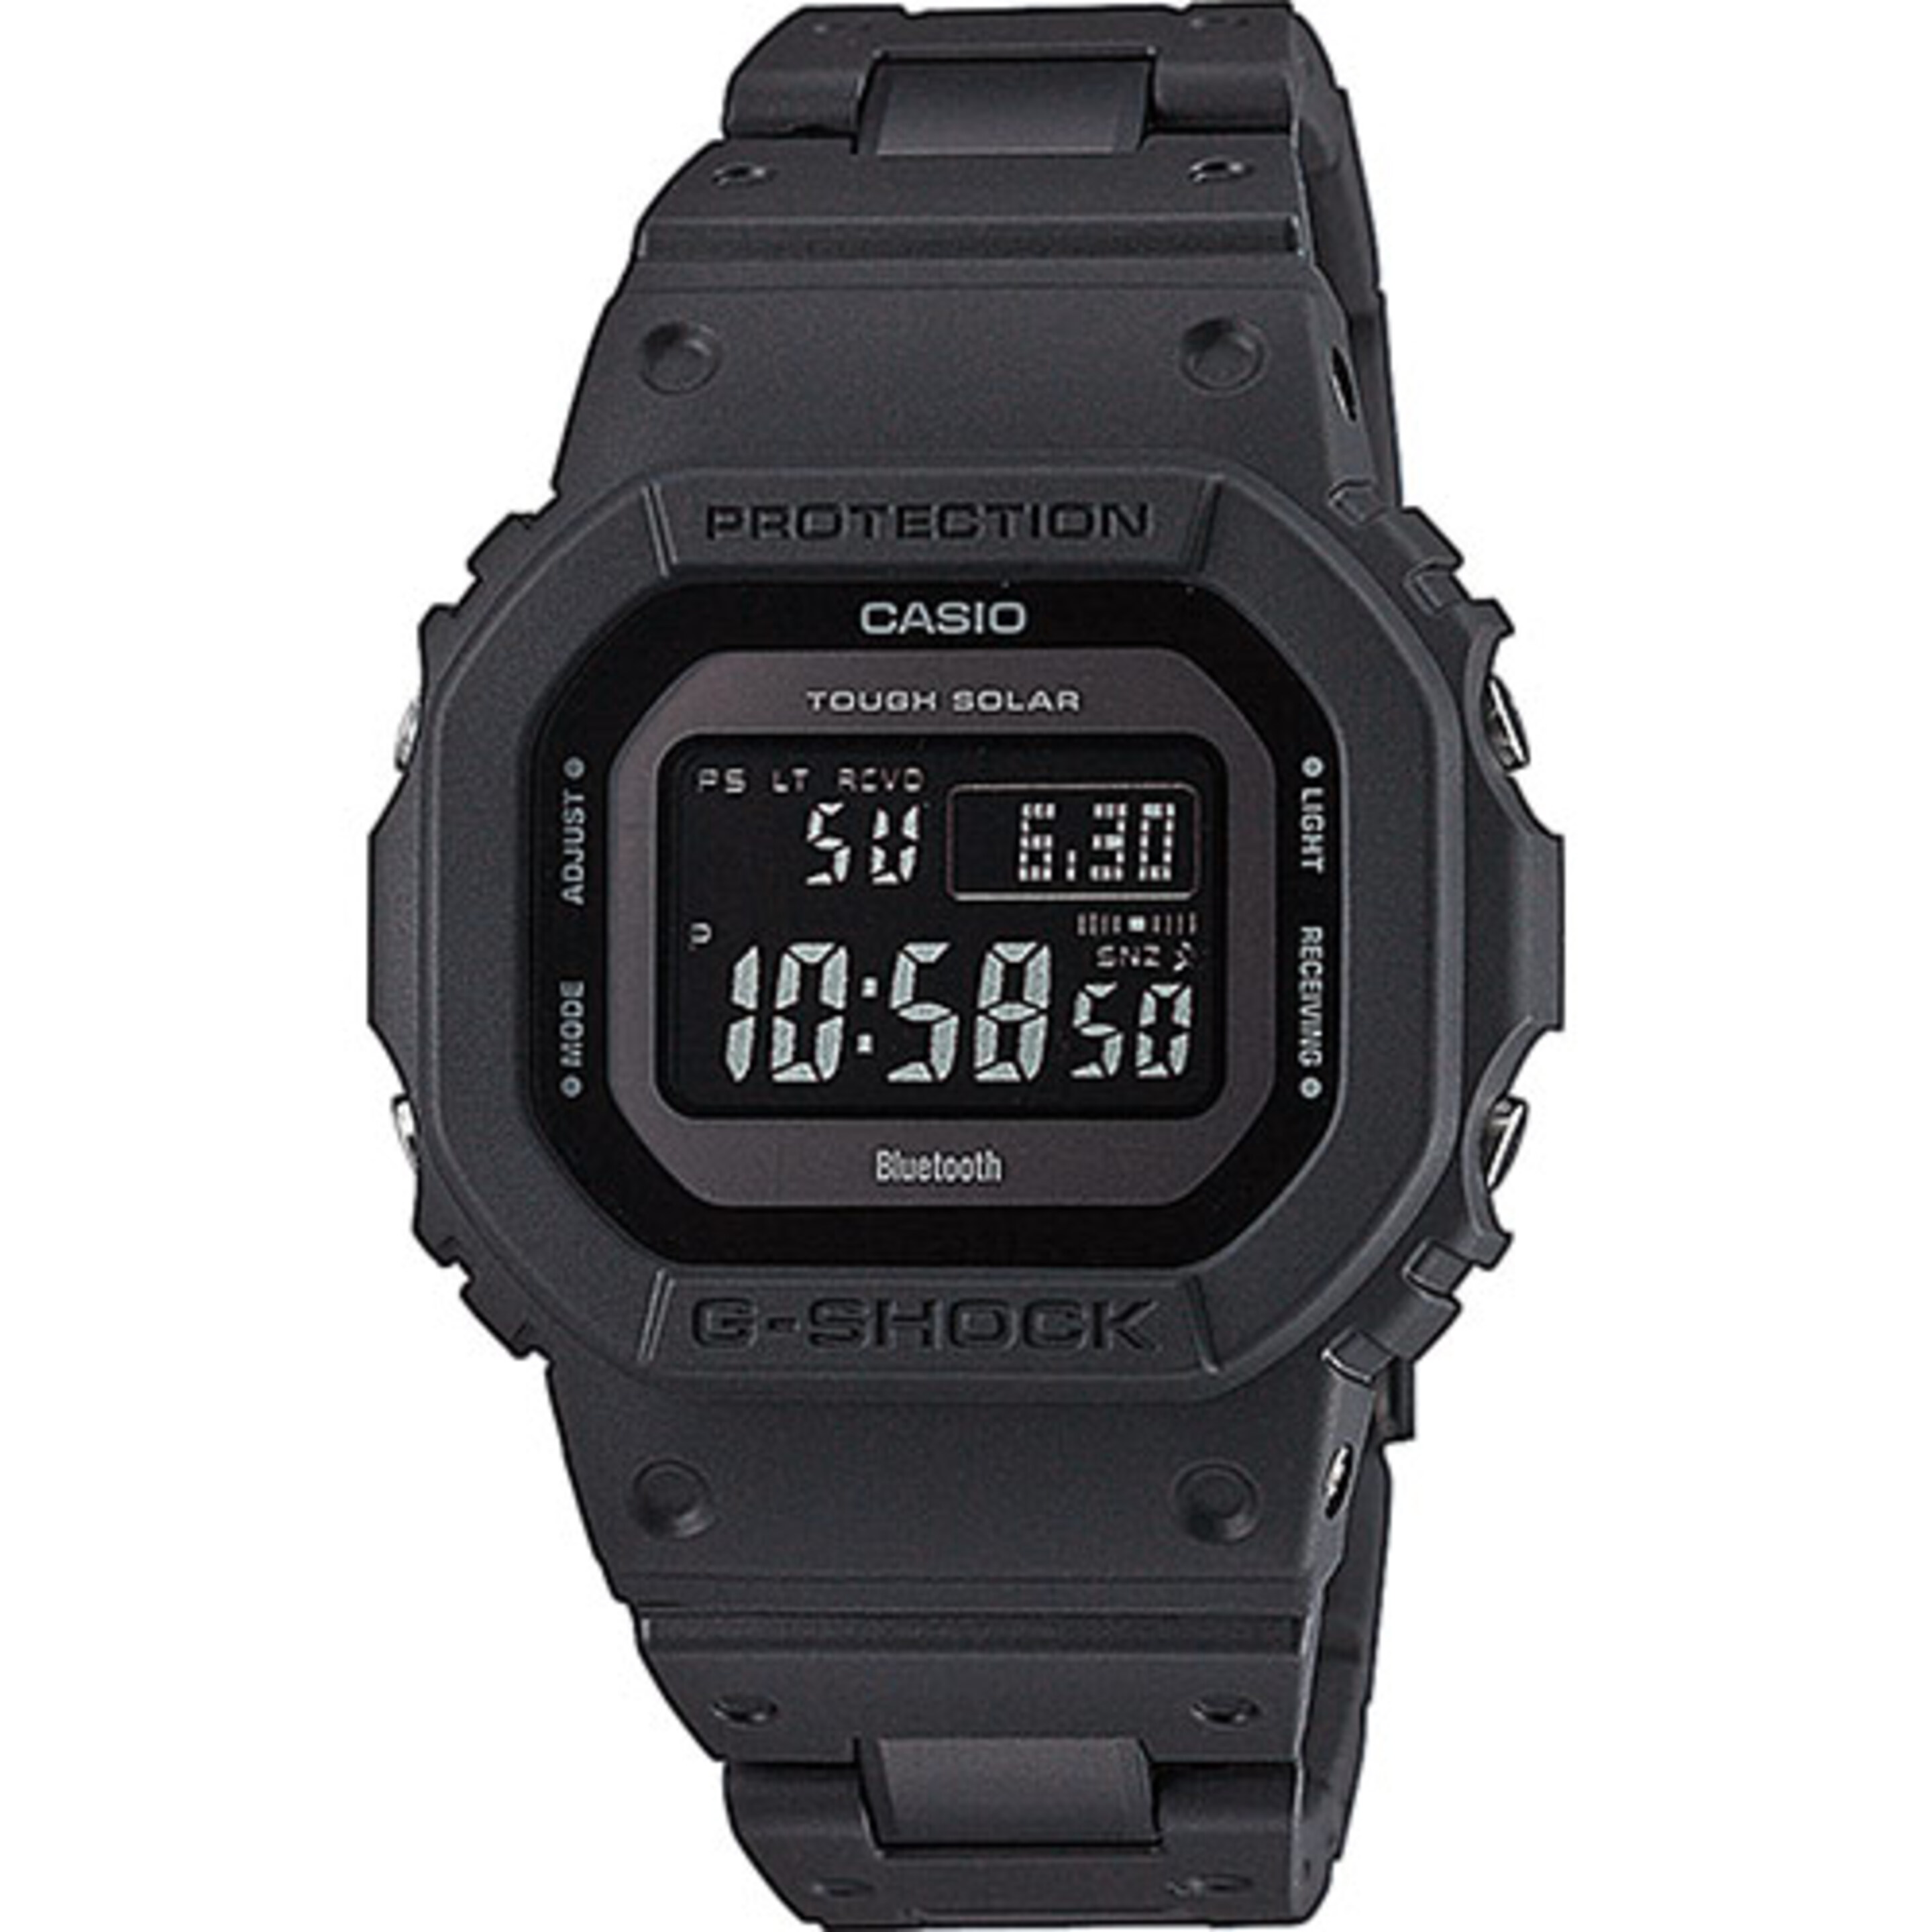 Reloj G-shock Gw-b5600bc-1ber - negro - G-shock 5600 Series + Bluetooth  MKP